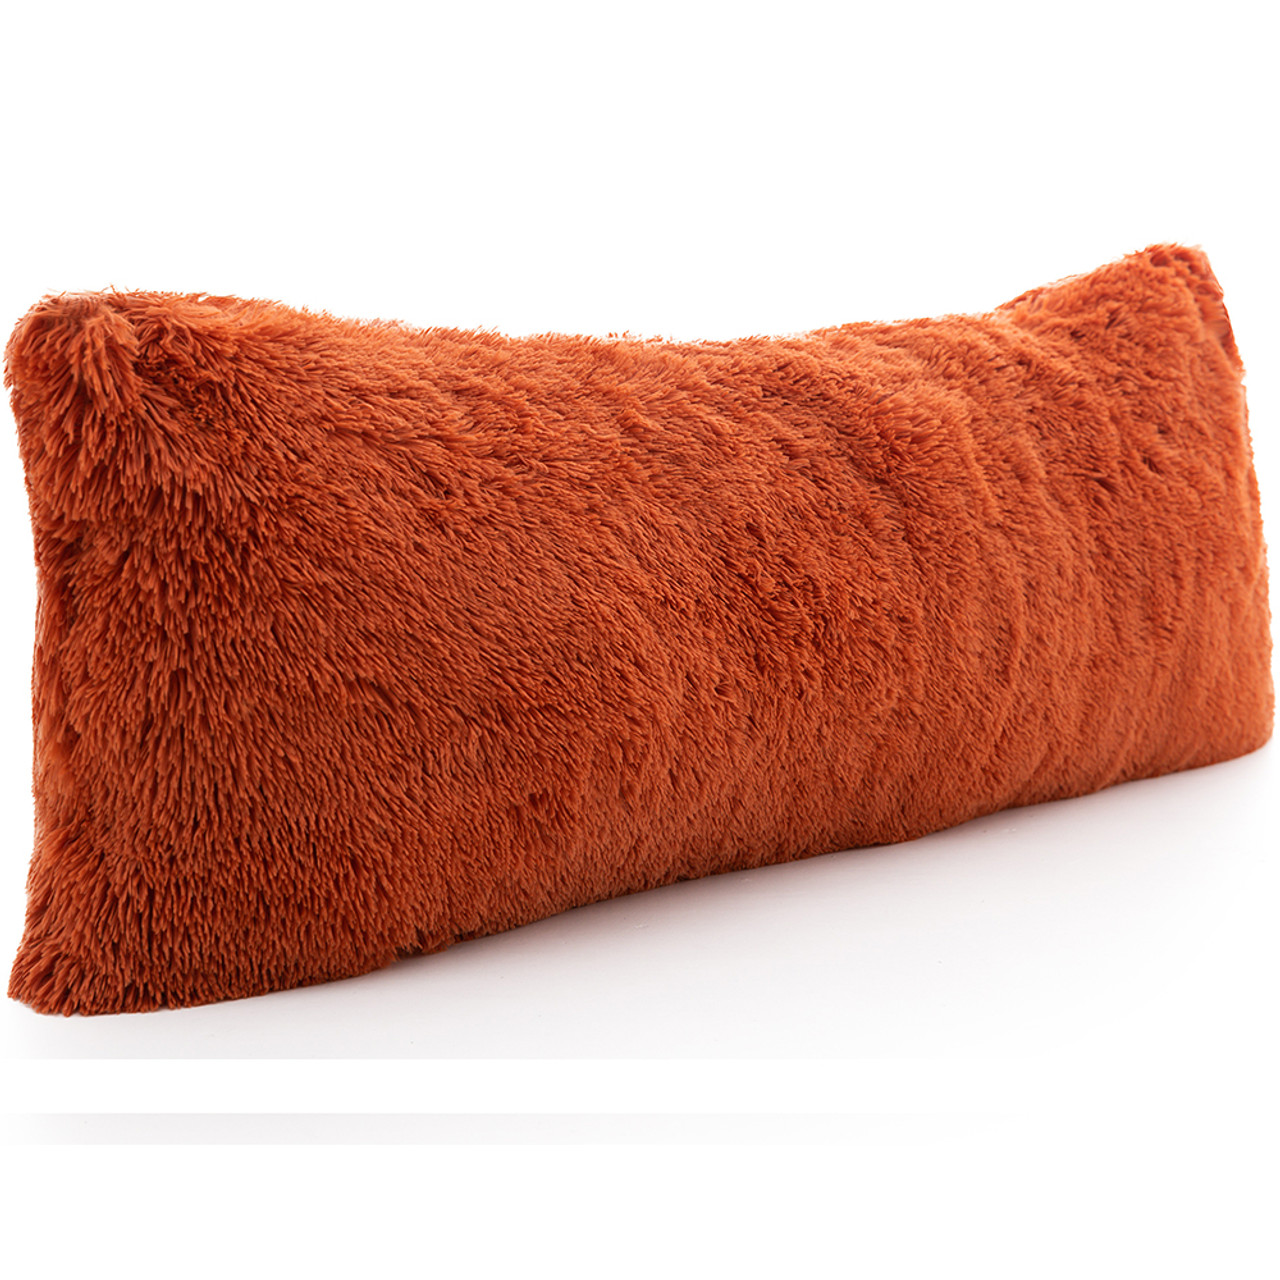 Channel Rust Orange Faux Fur Throw Pillow 18